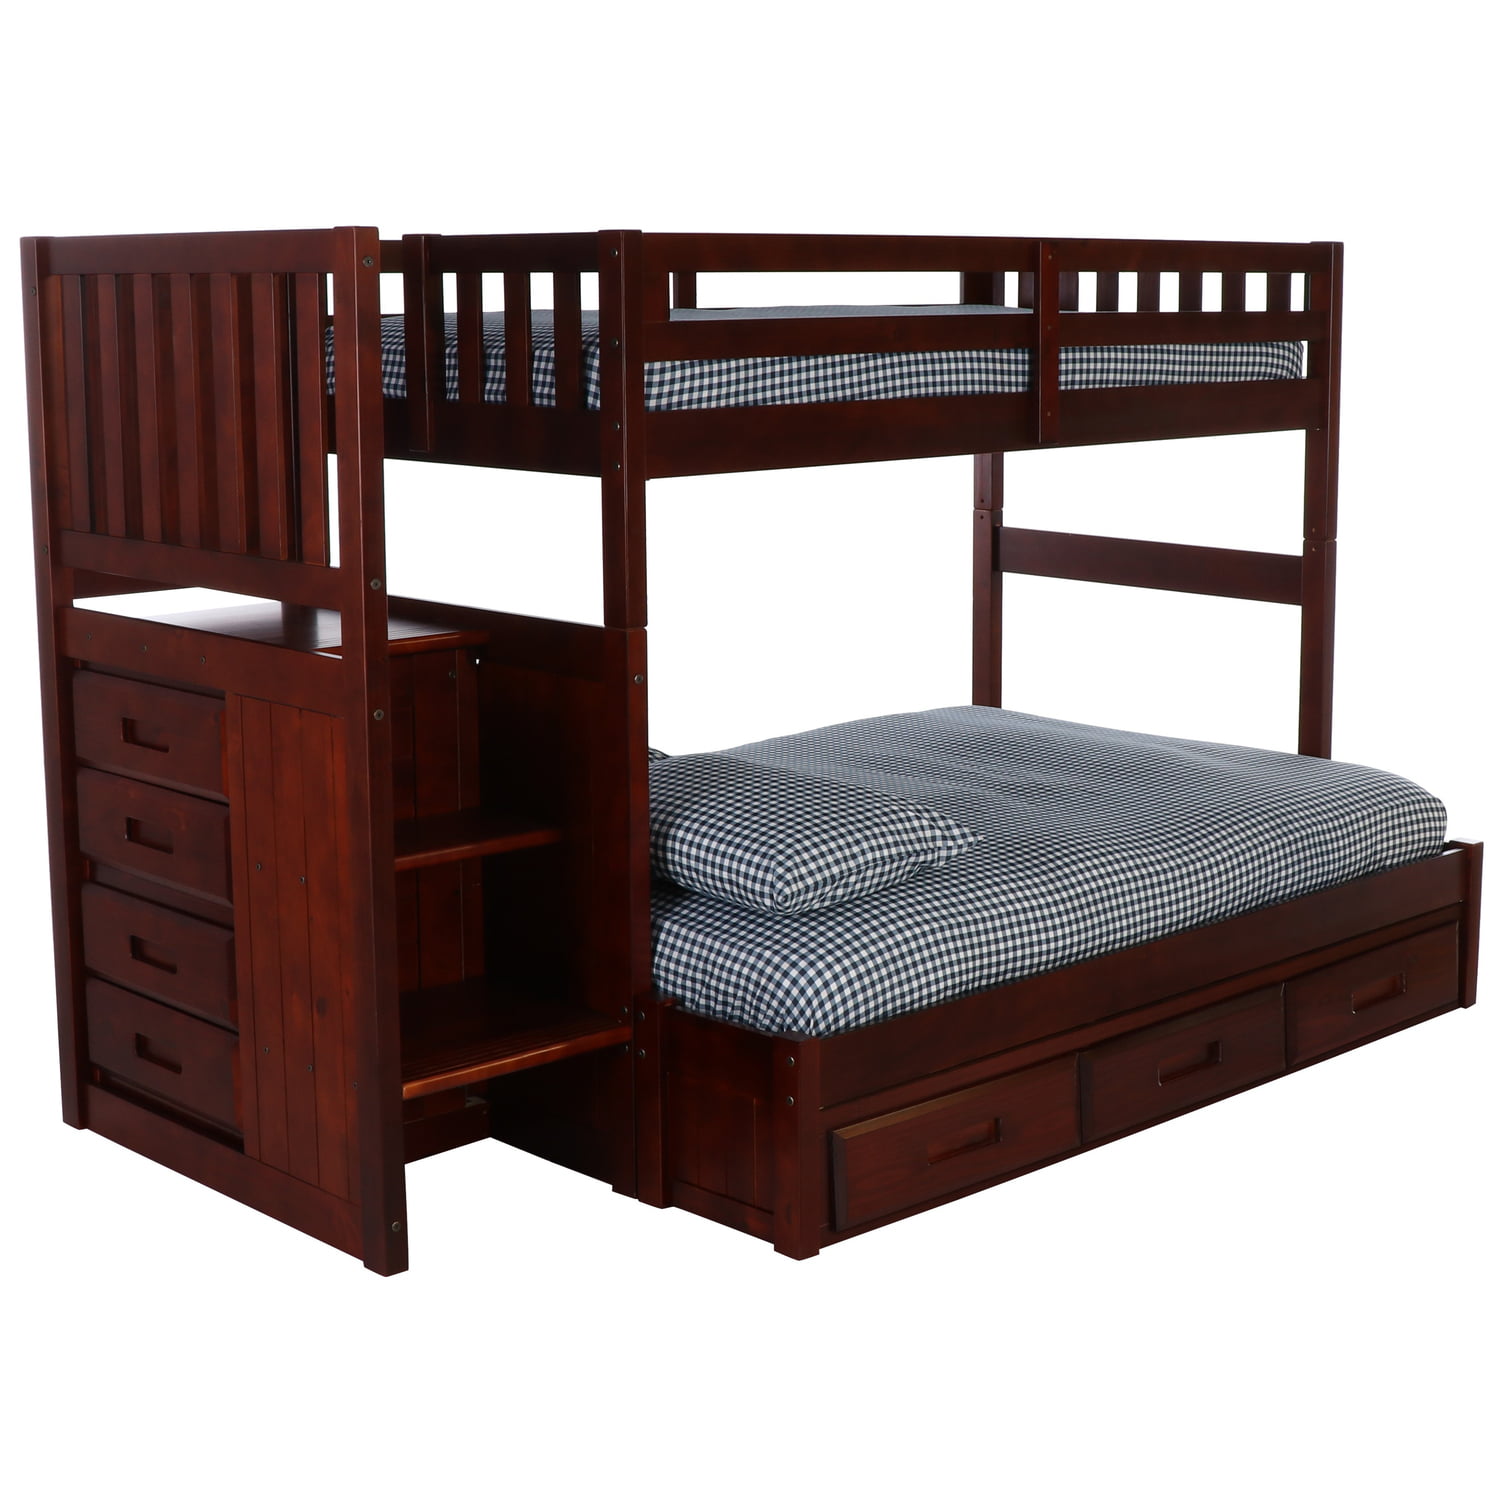 American Furniture Classics Model 2805, American Furniture Classics Bunk Bed Twin Full